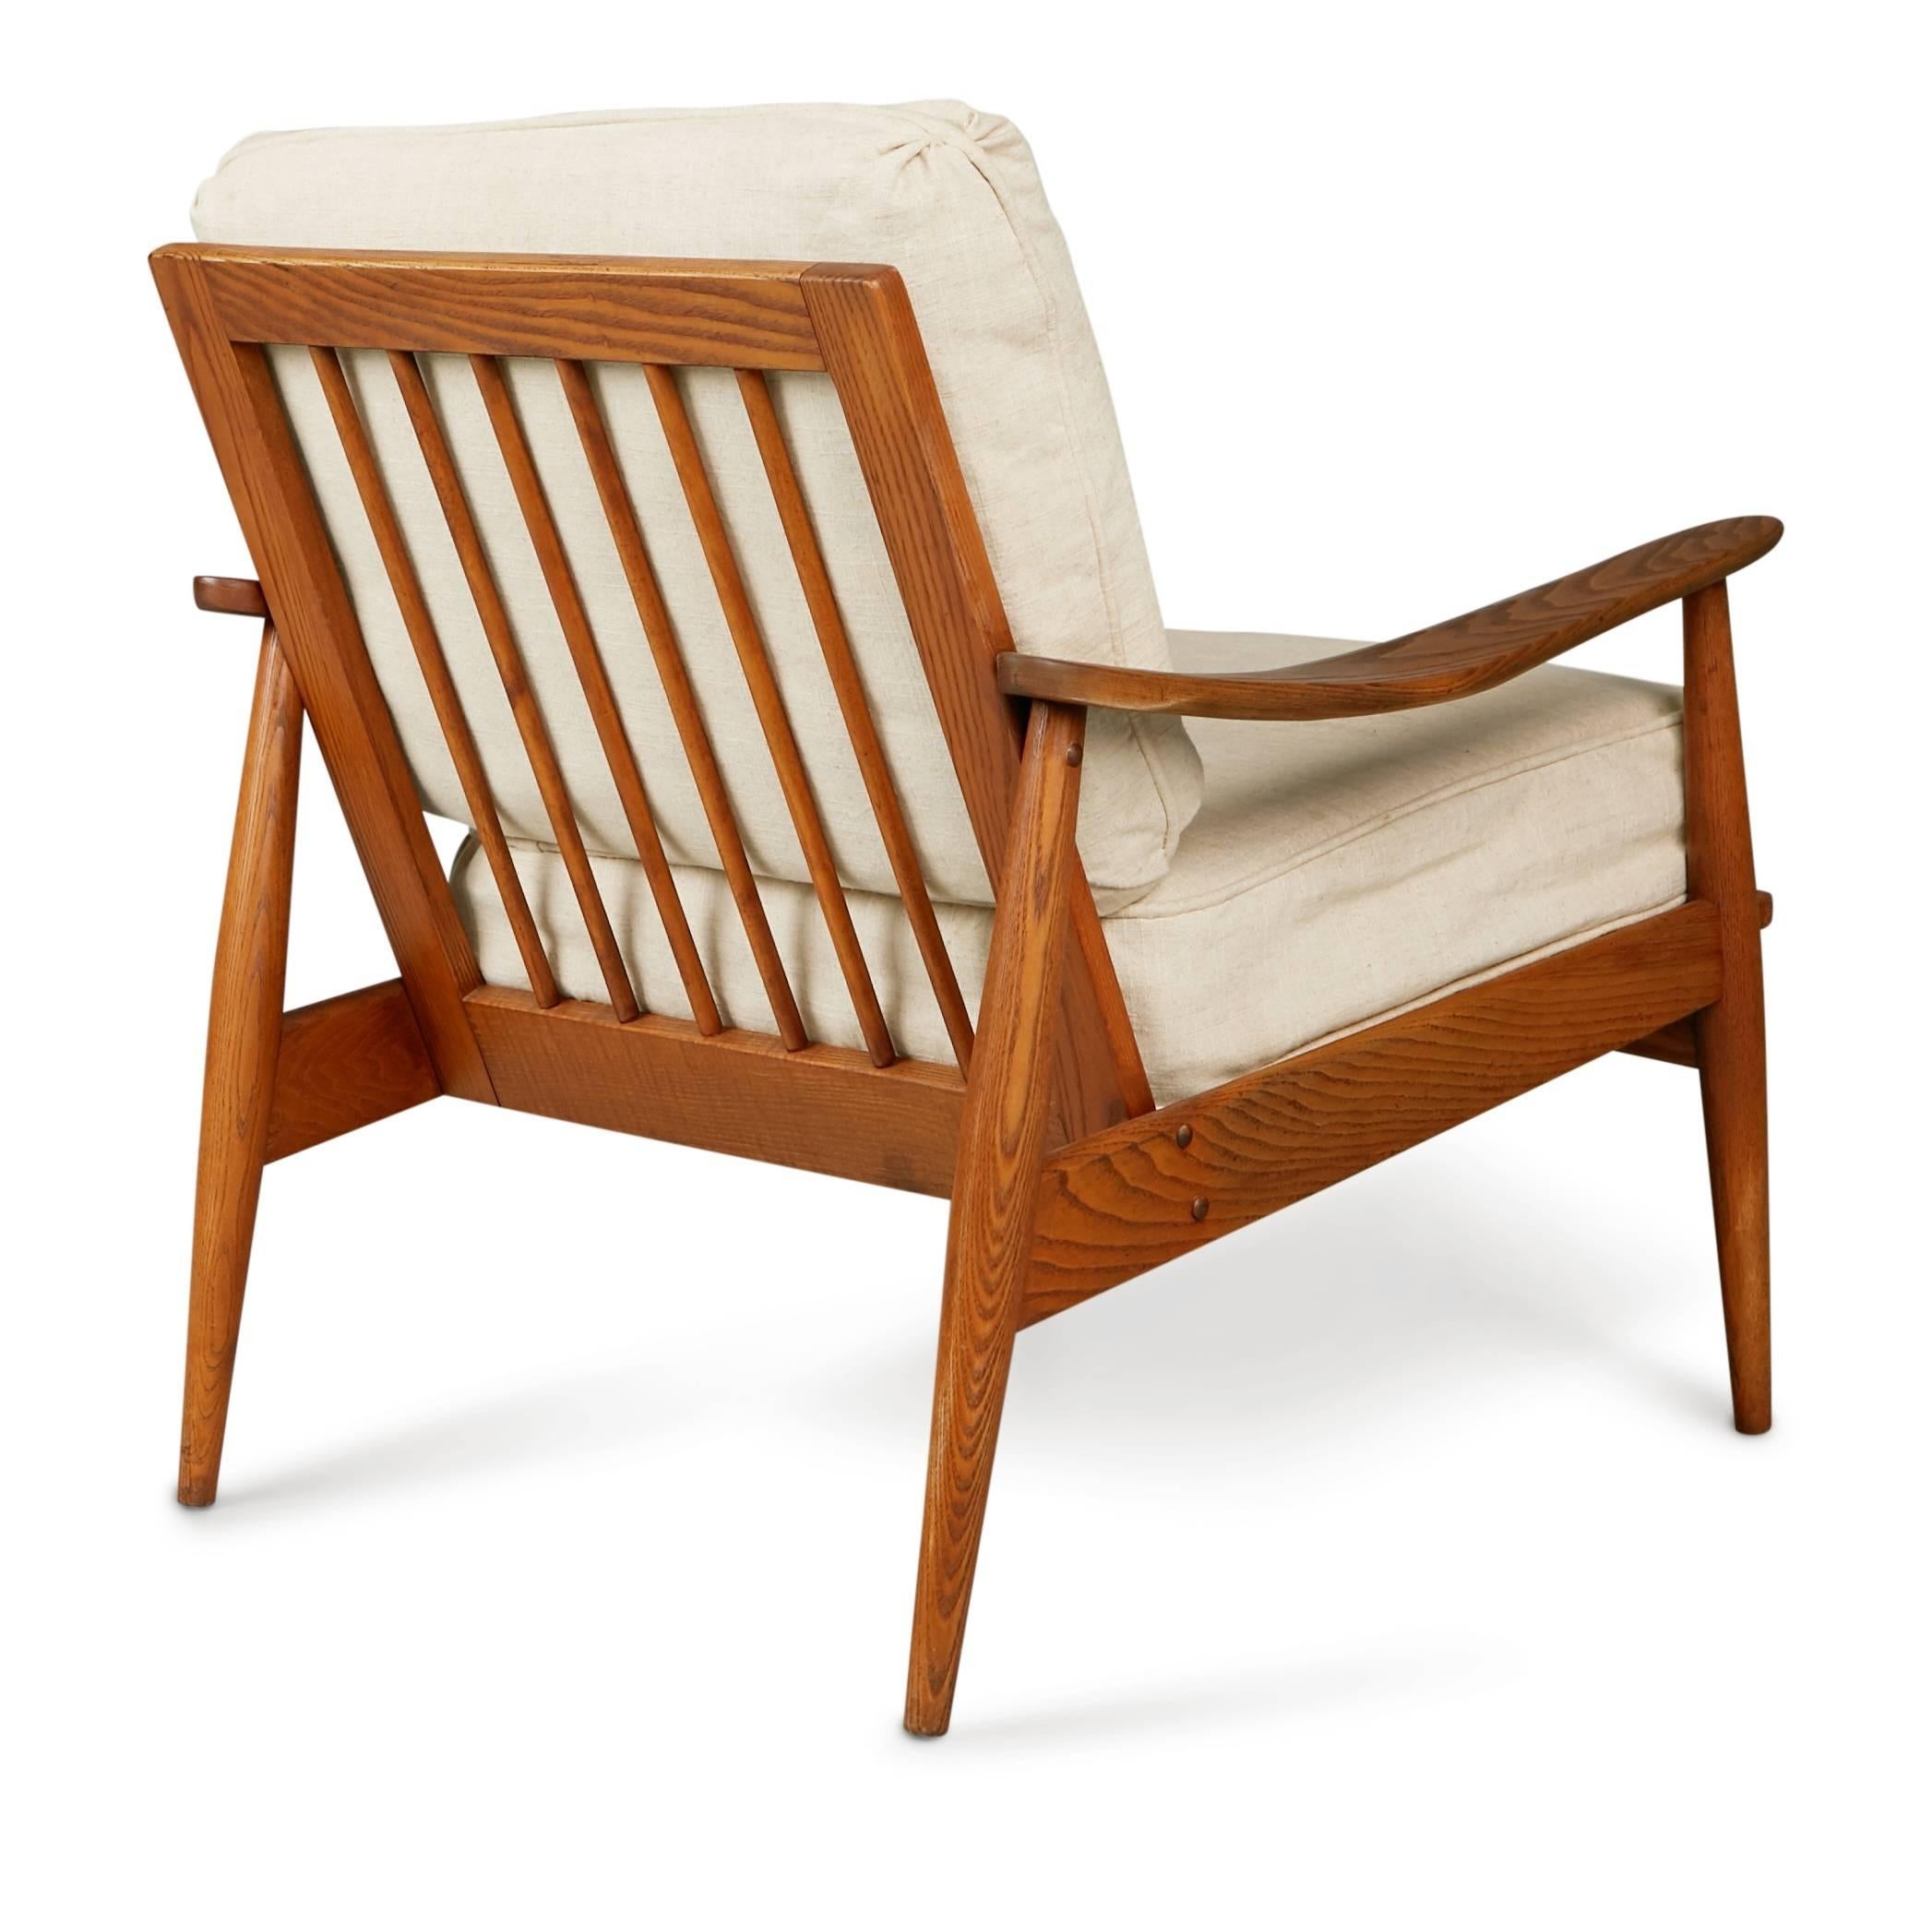 Mid-20th Century Exotic Wood Grain Mid-Century Modern Lounge ArmChair, circa 1960